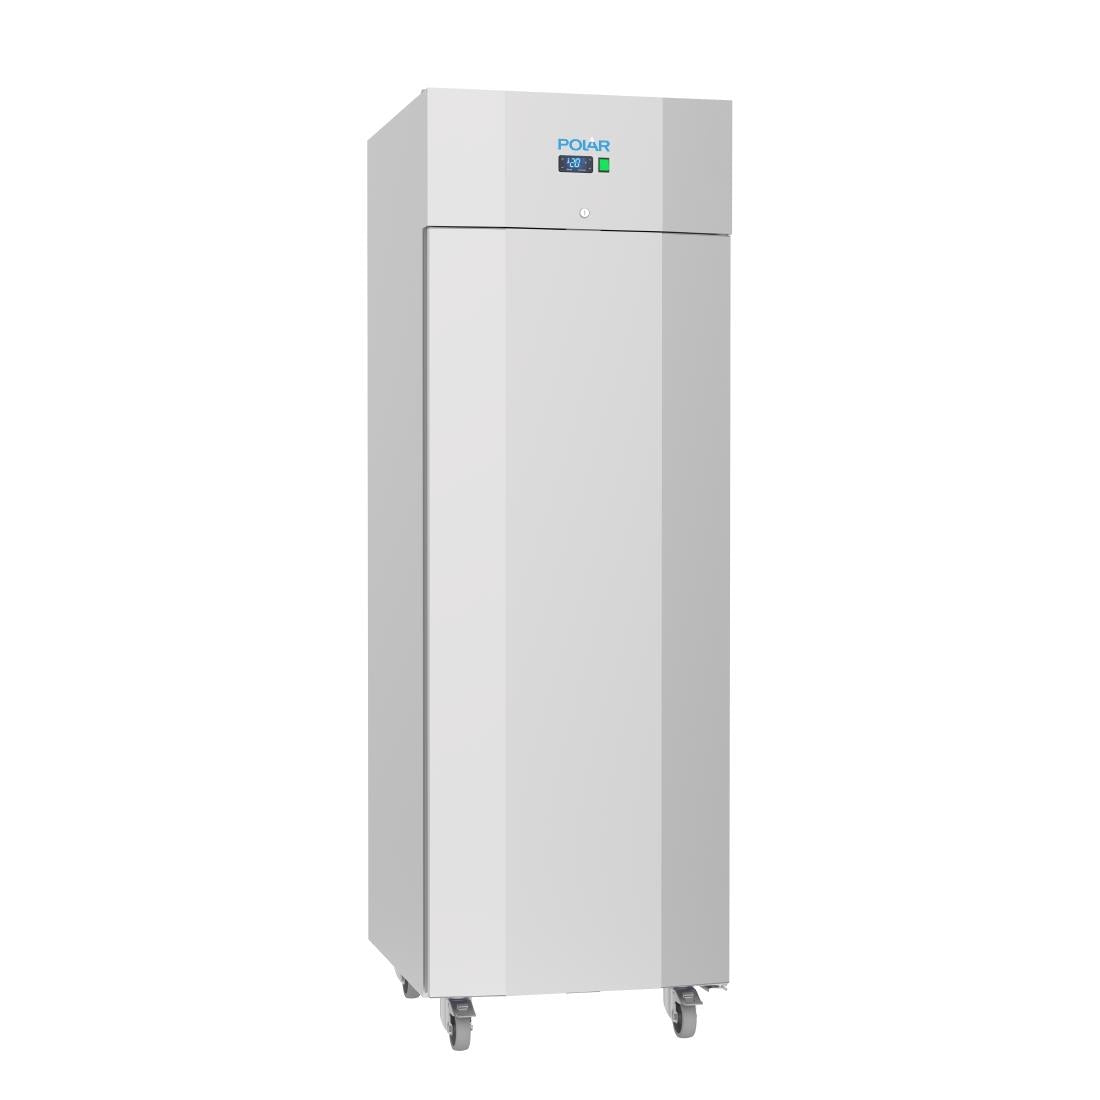 UA030 Polar U-Series Energy Efficient Single Door Upright Refrigerator 700Ltr